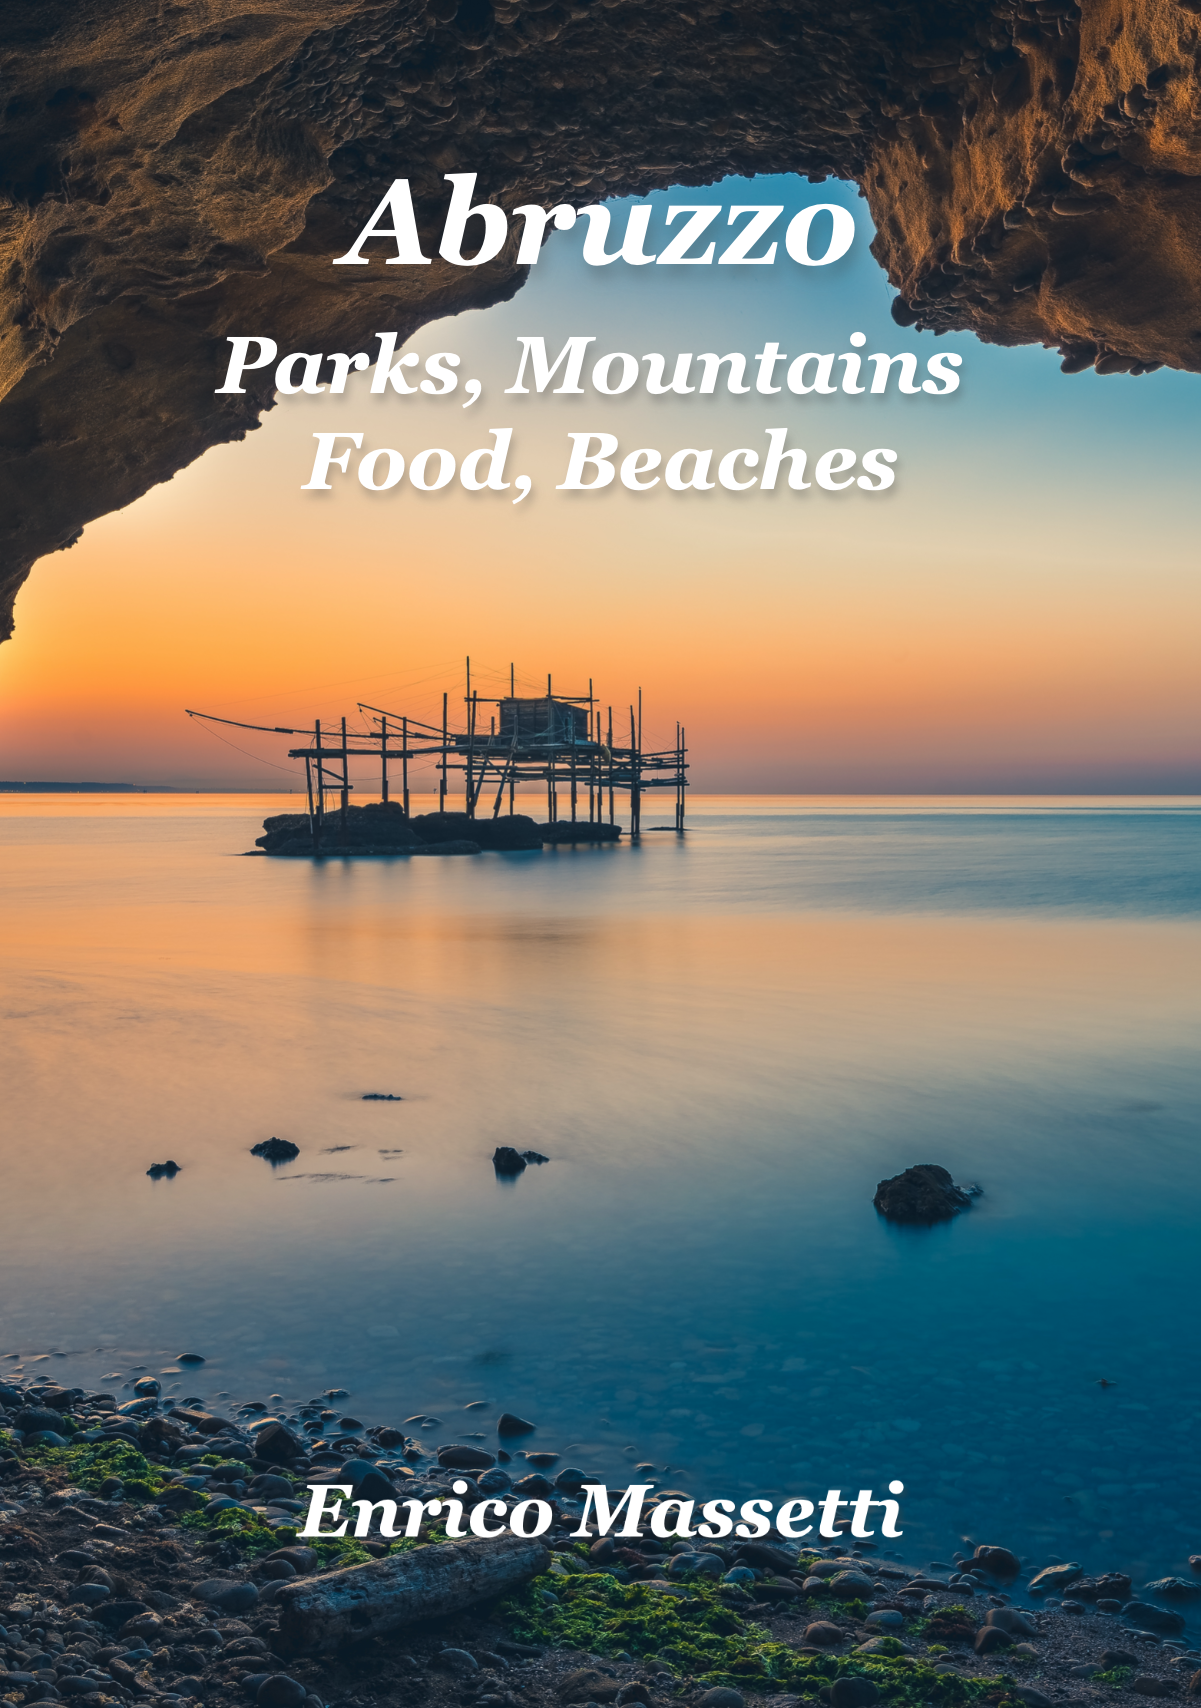 Abruzzo Parks, Food, Beaches